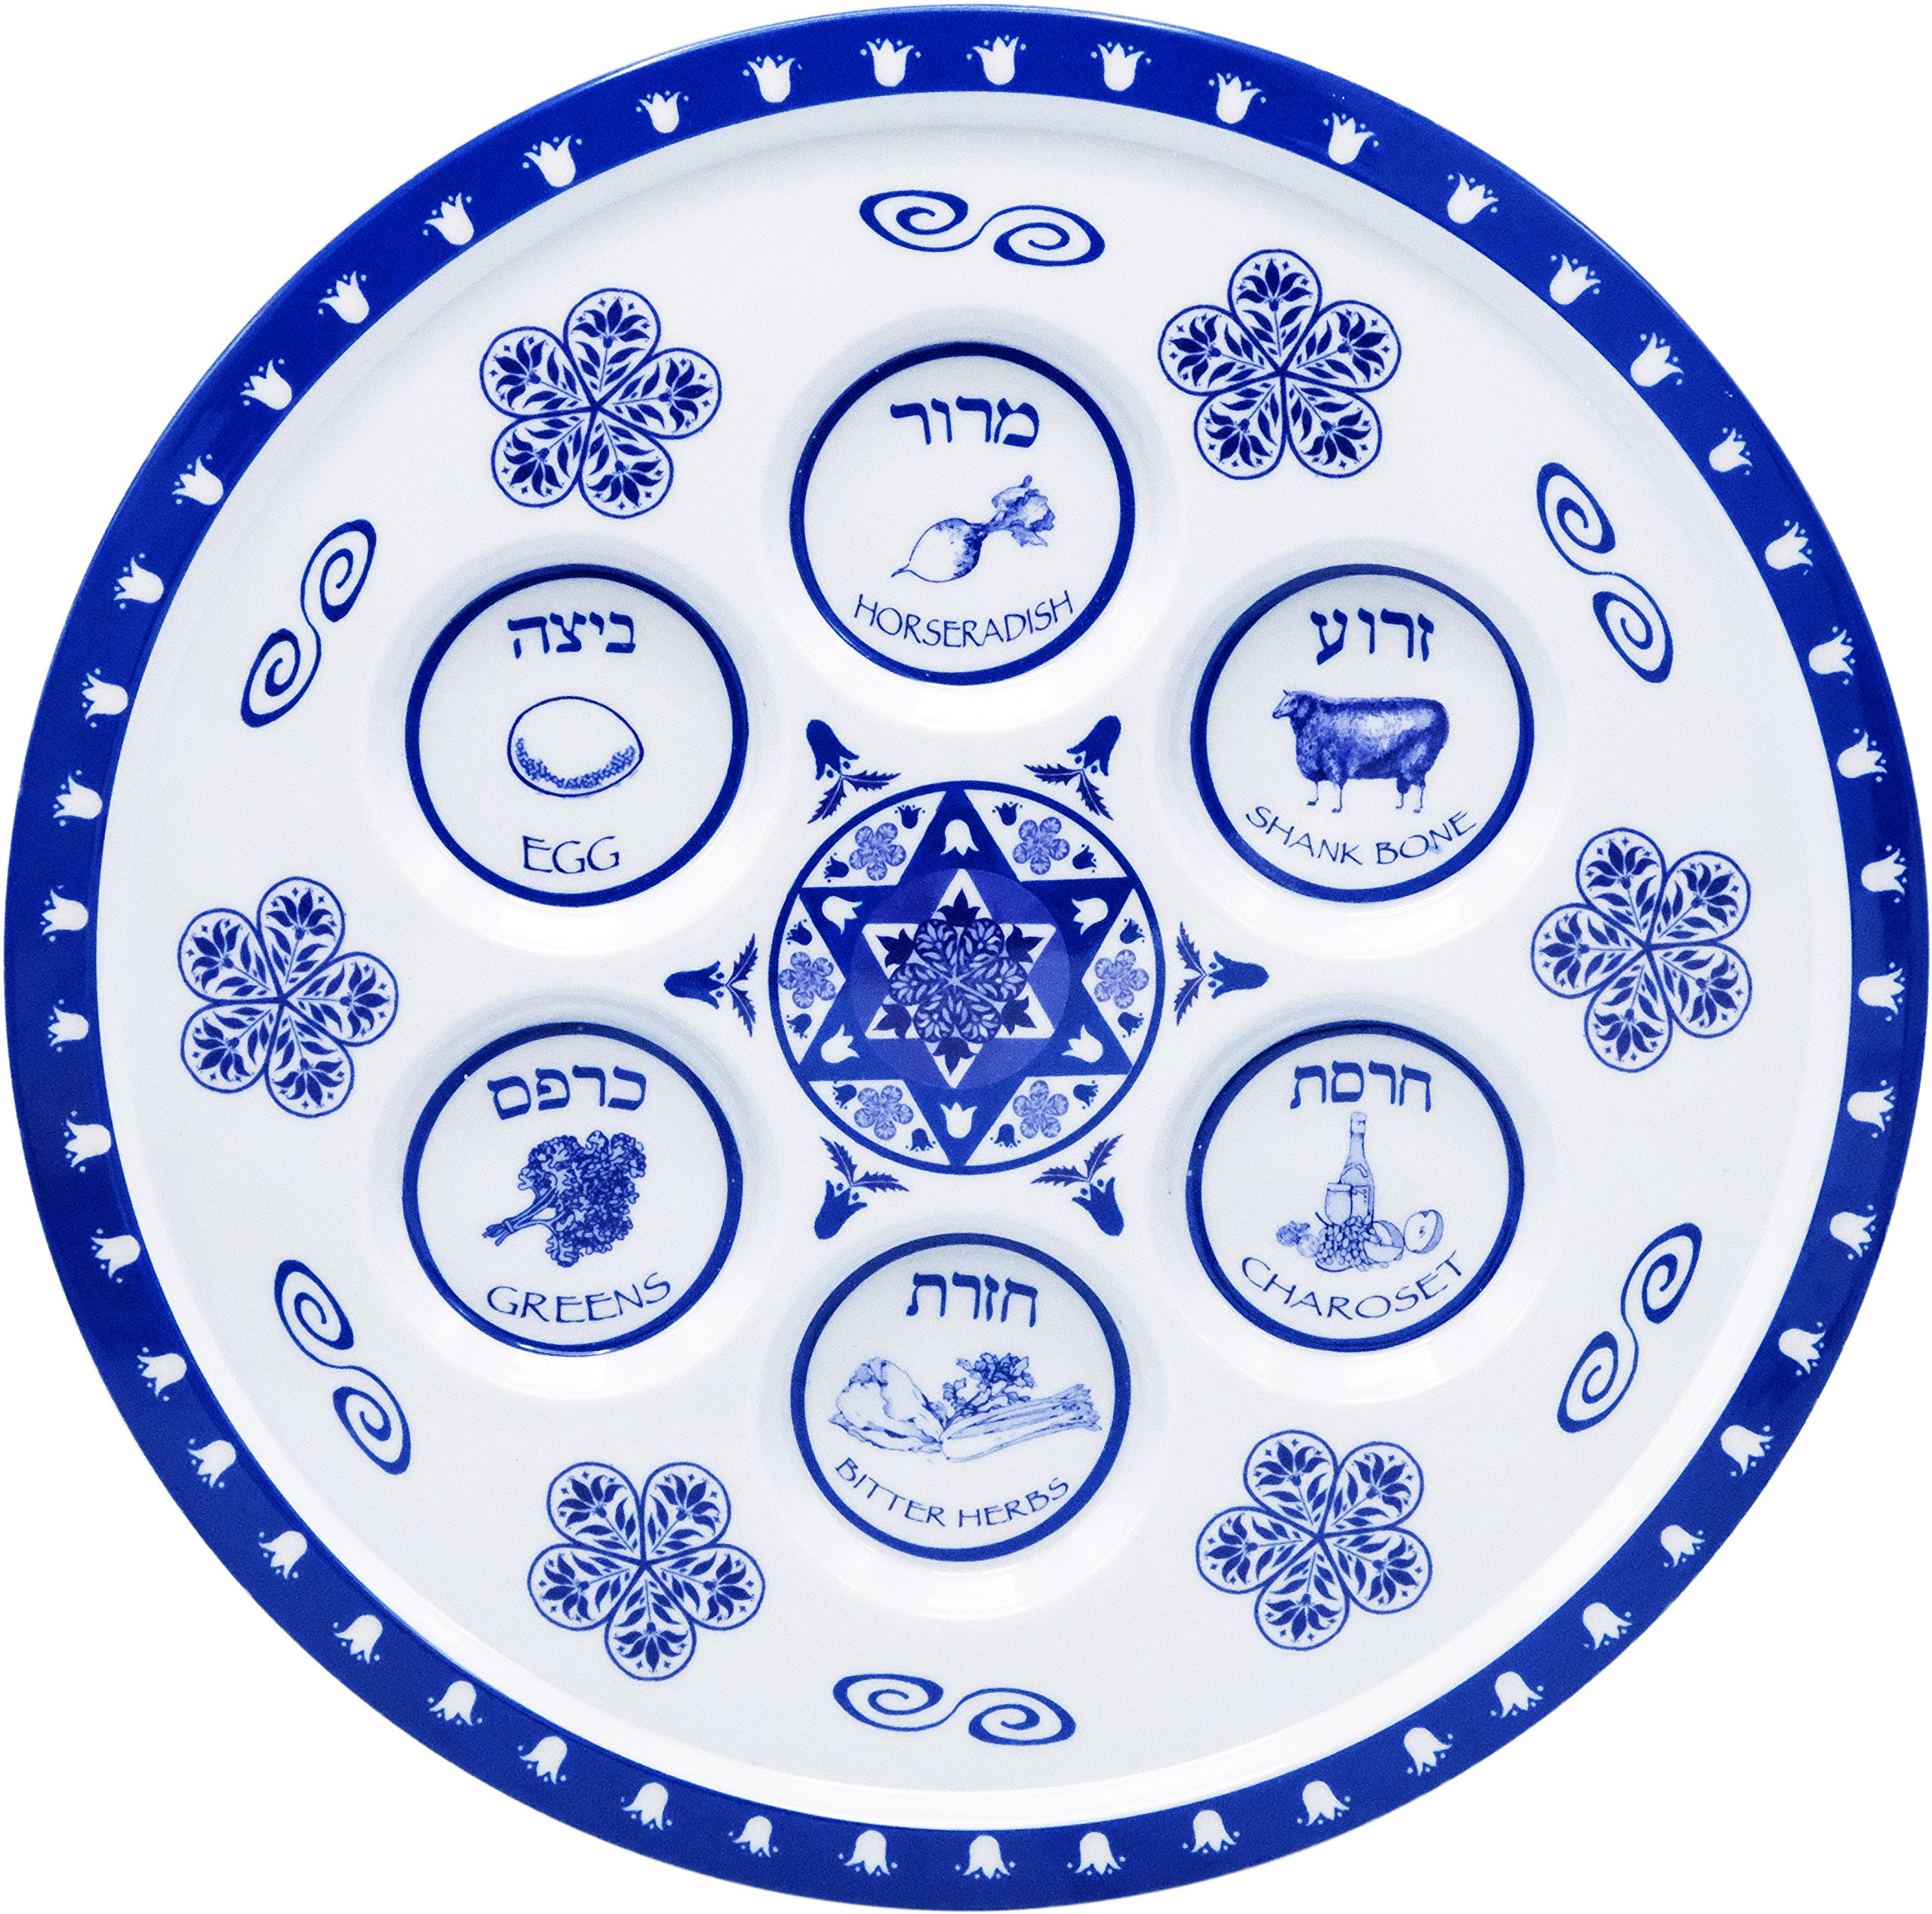 The Dreidel Company Seder Plate Passover Plate Melamine Renaissance Design Passover Seder Plates